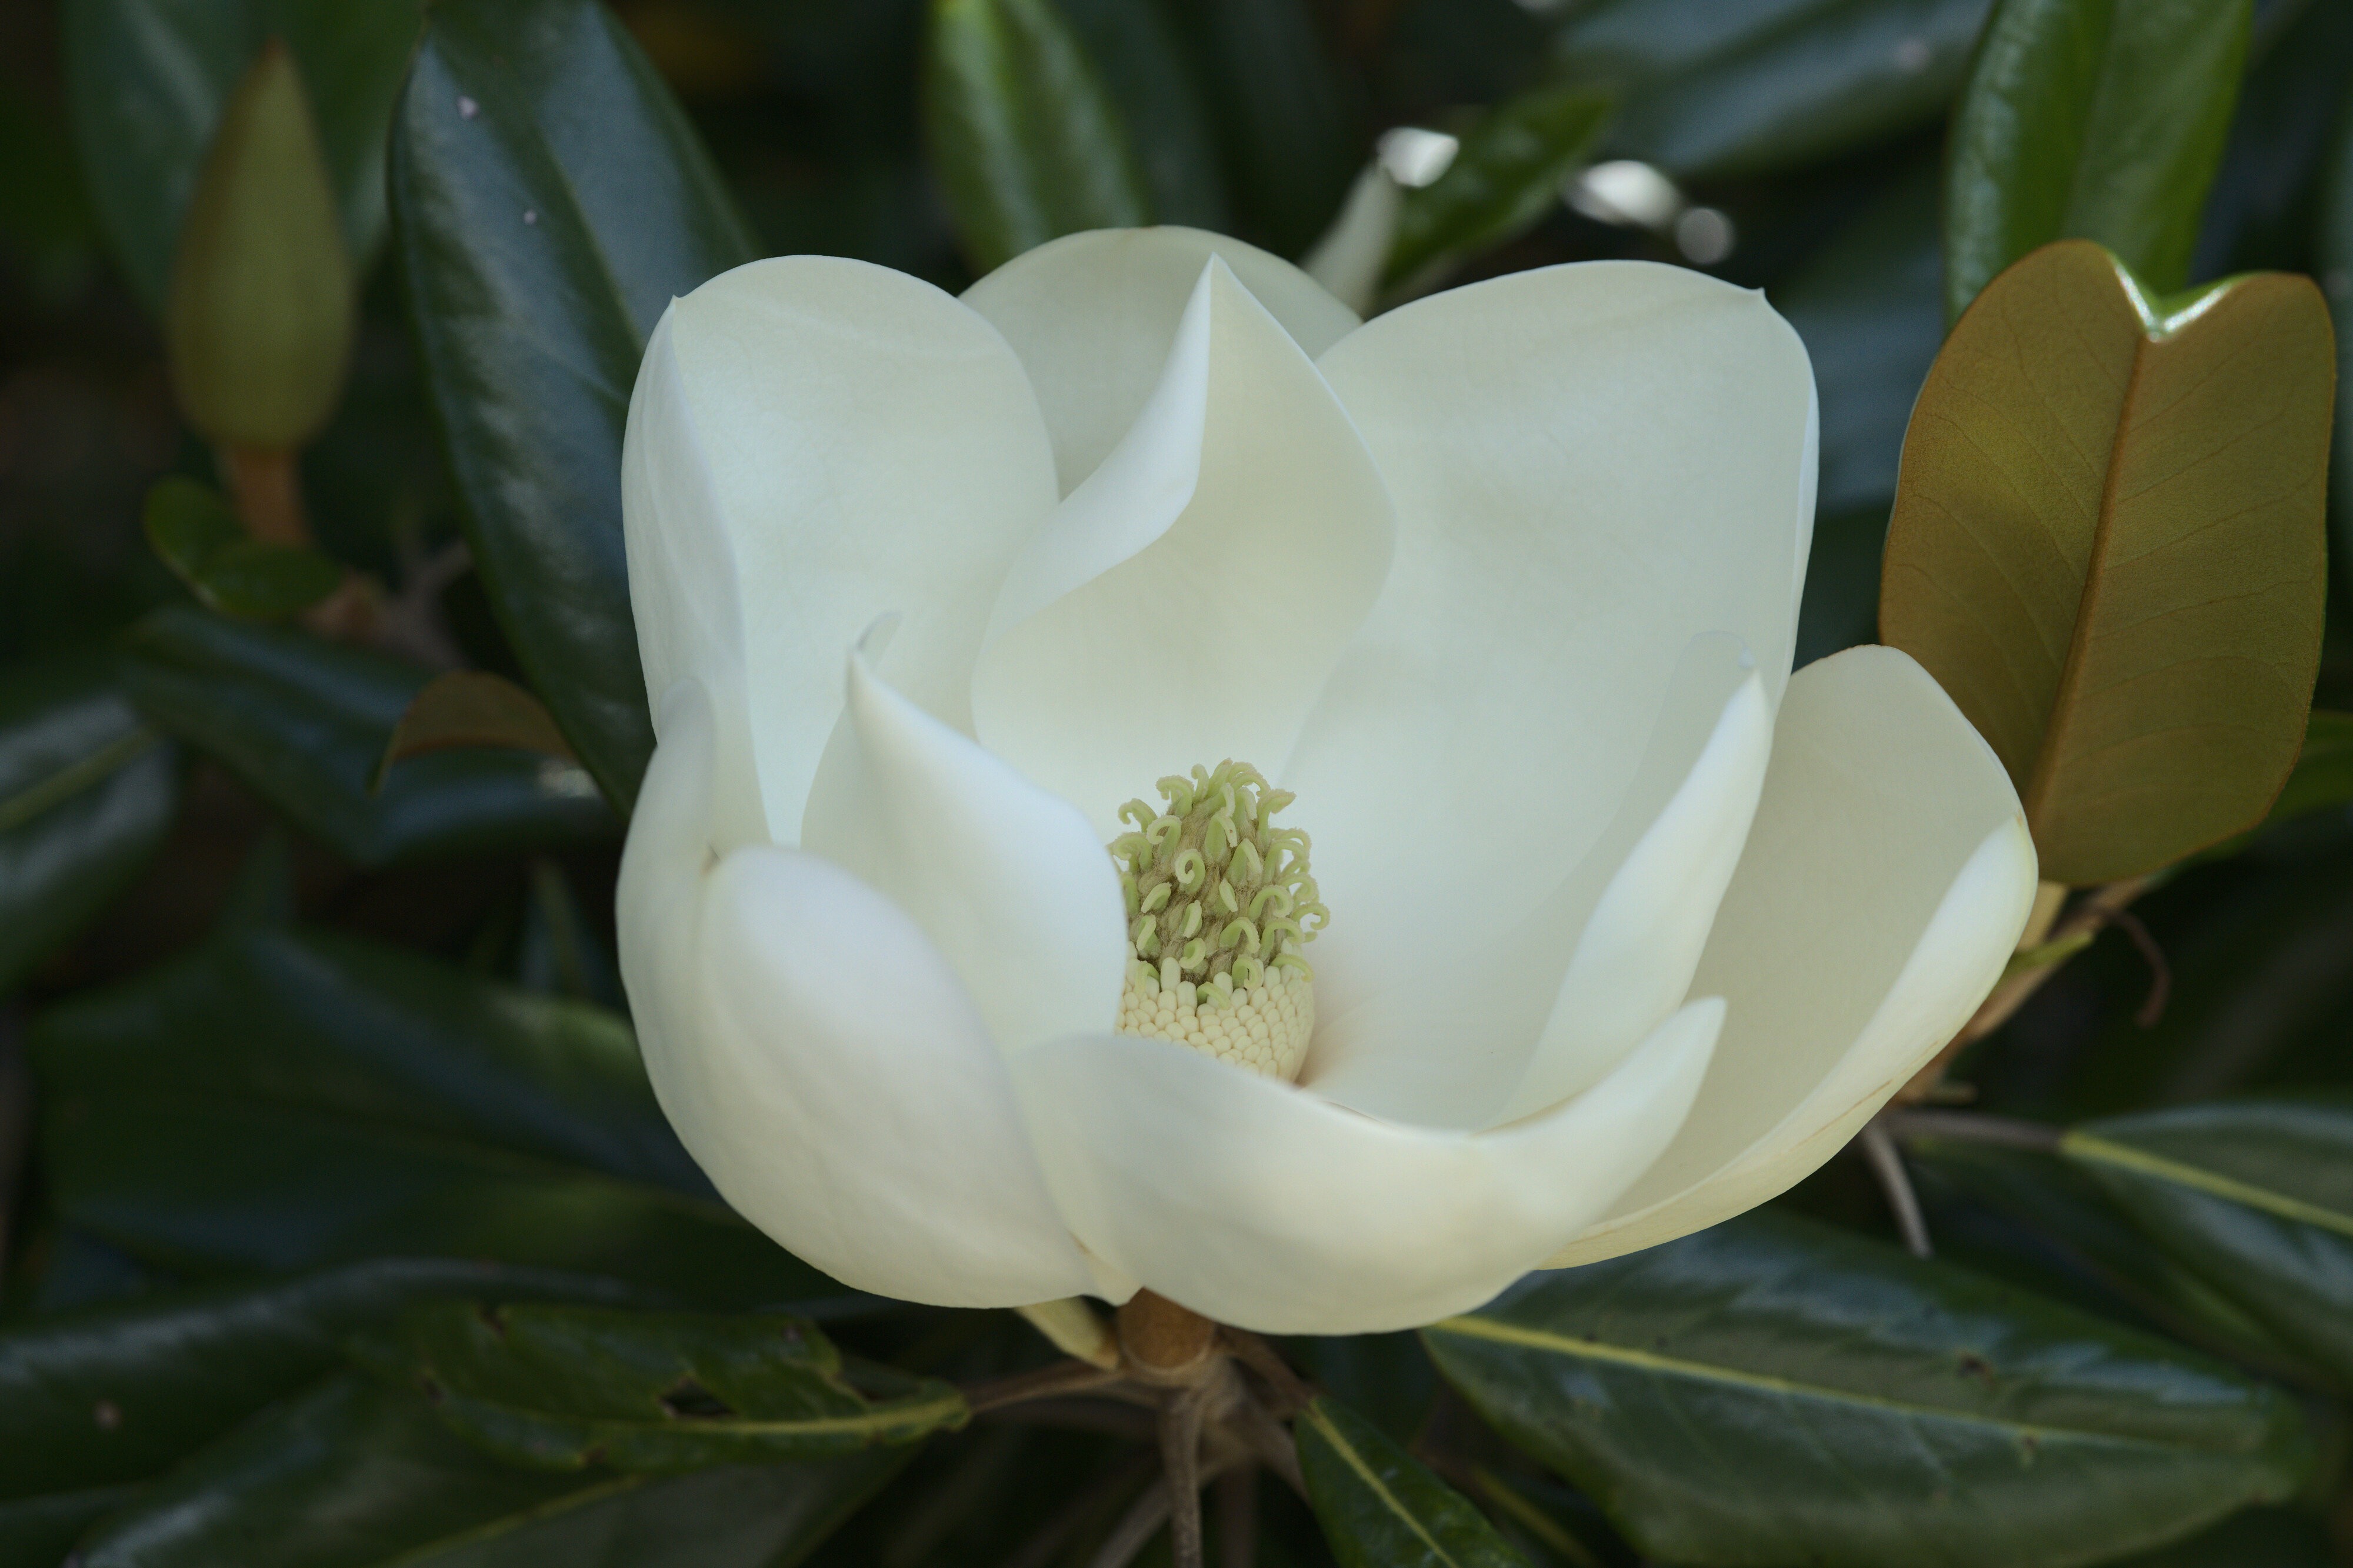 A7RIV_Magnolia Flower In Bloom-01786.jpg